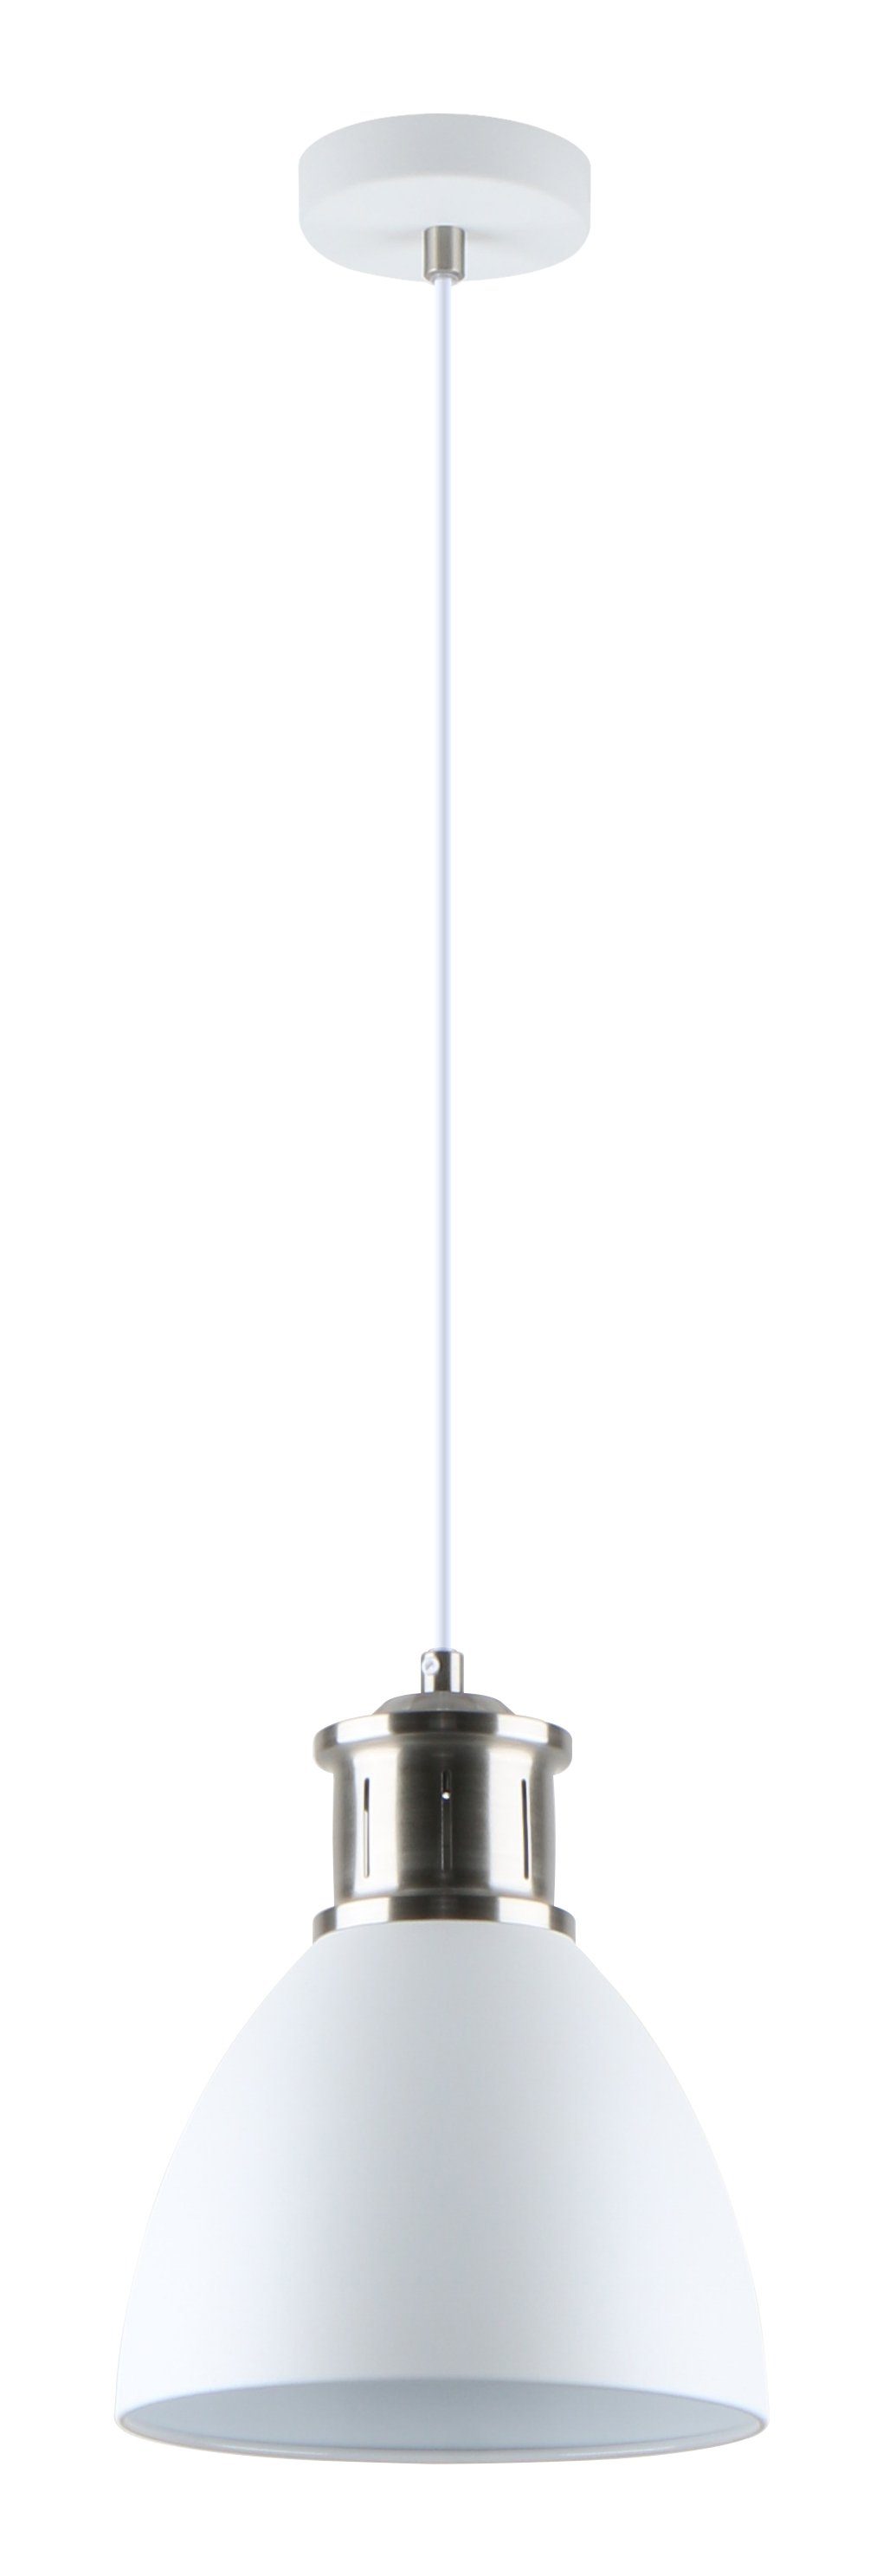 LED Universum LED Pendelleuchte "Steve" weiß/silber, Ø 20cm, E27 Fassung, max 40W